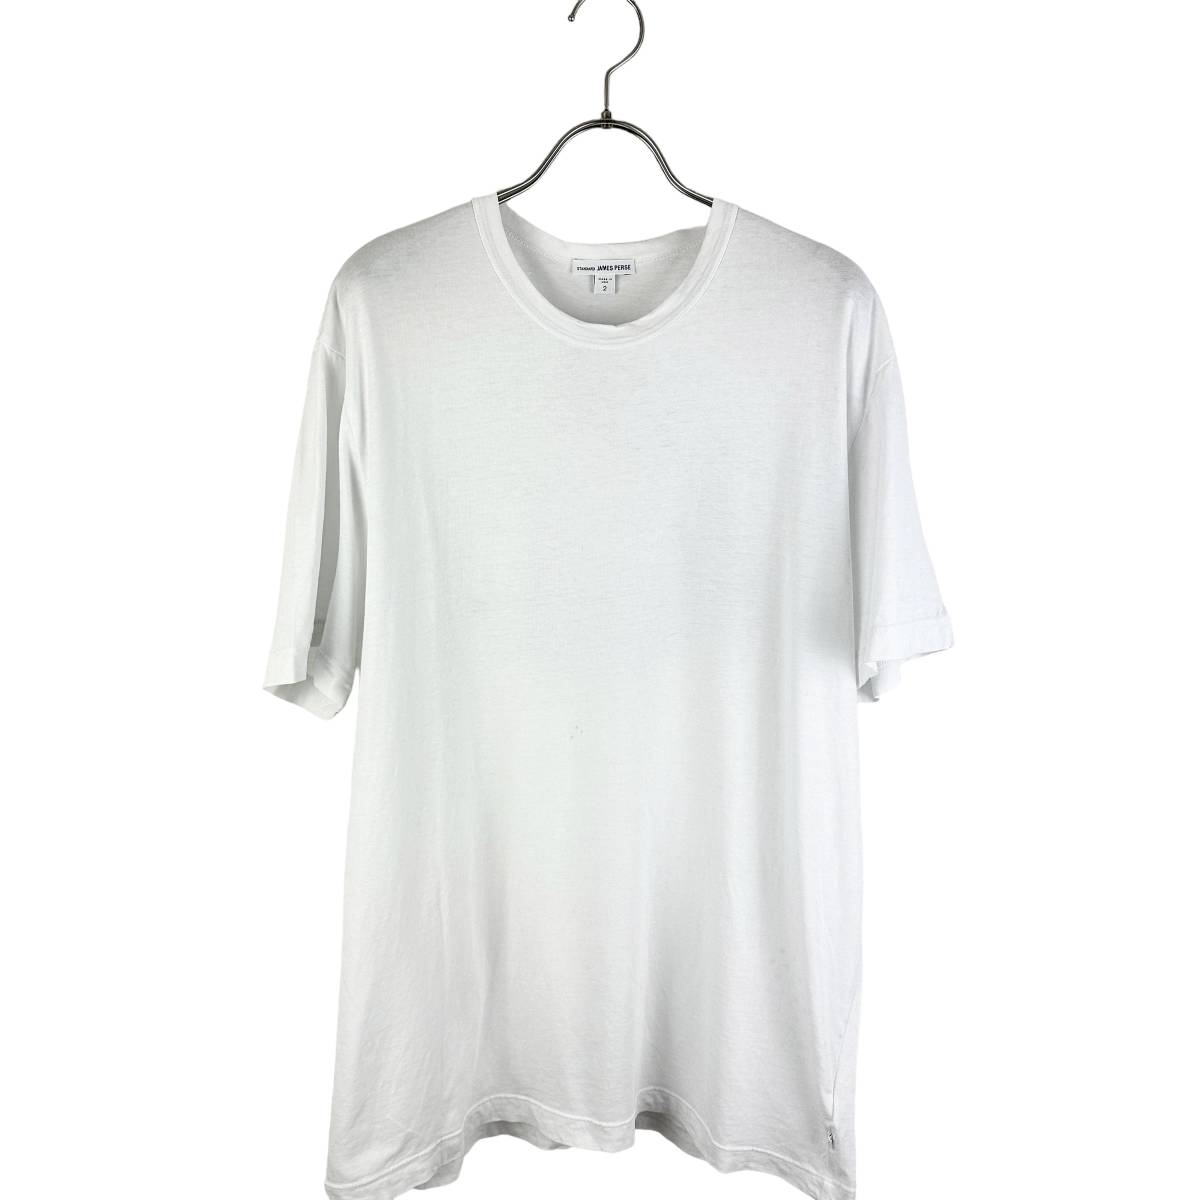 JAMESPERSE(ジェームスパース) Back Pattern Plain T Shirt (white)